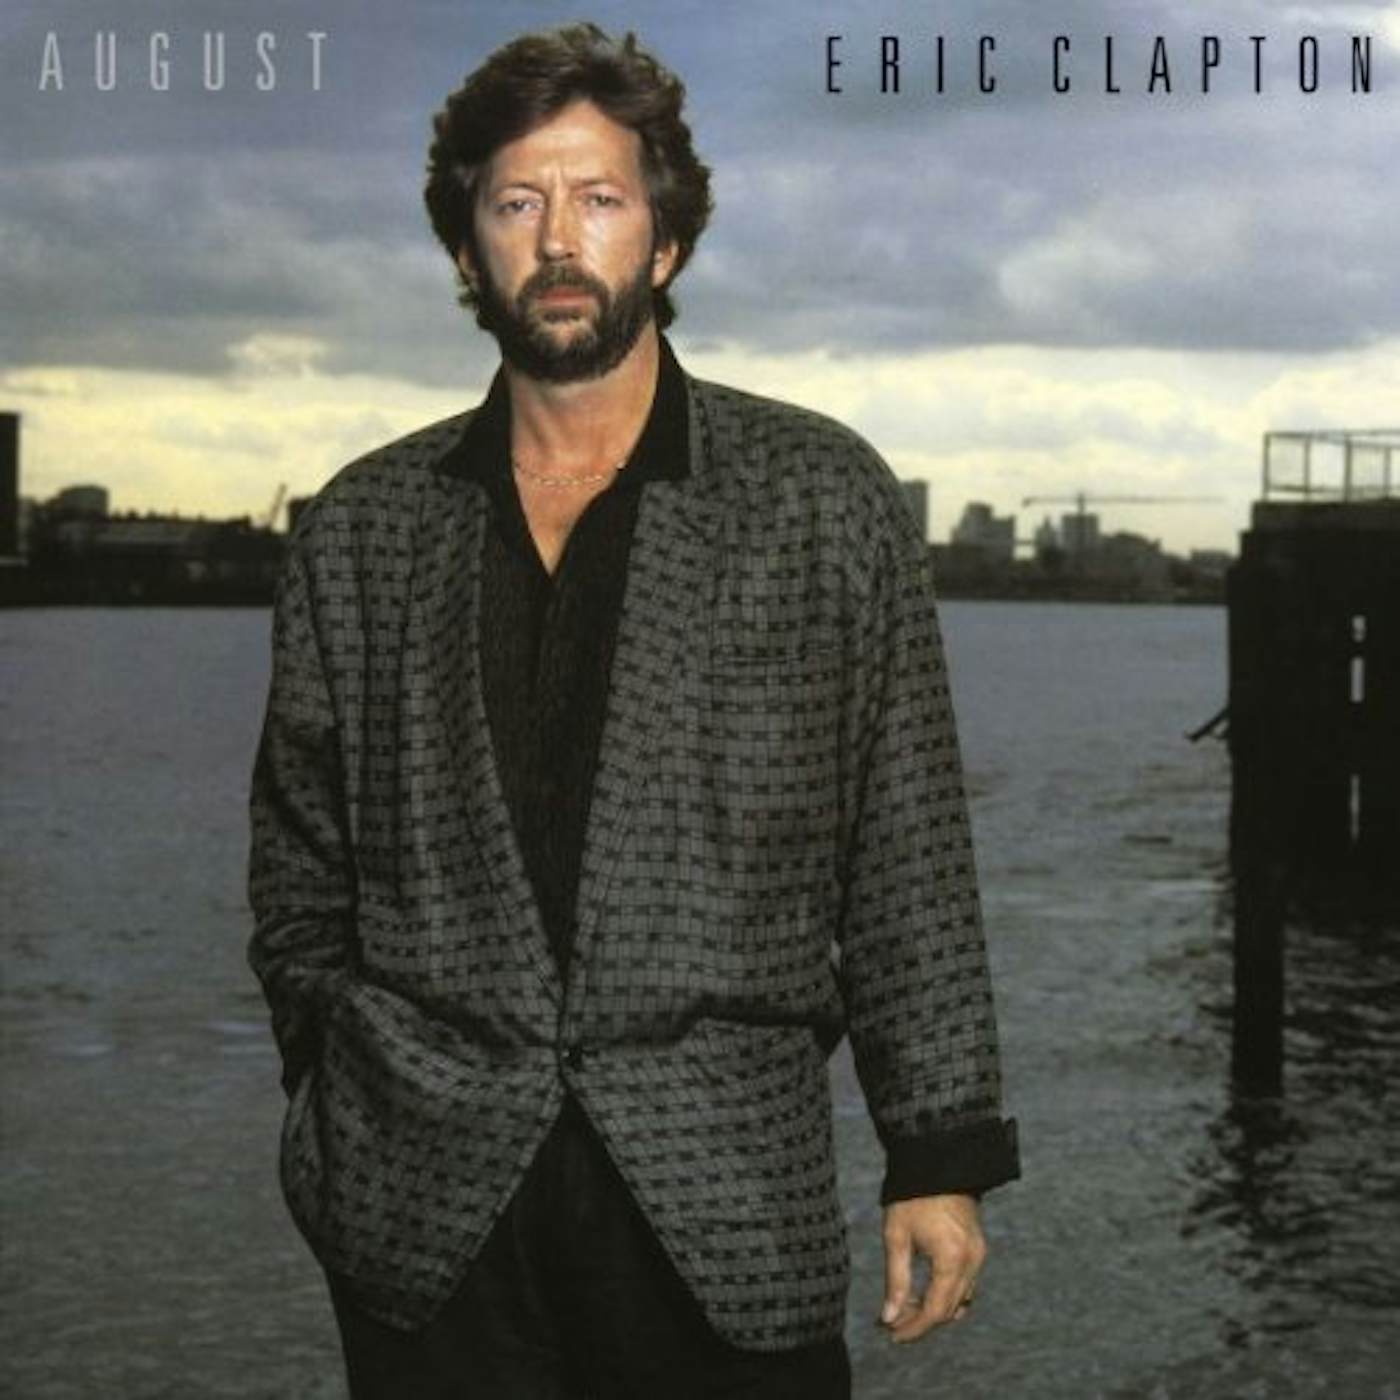 Eric Clapton August Vinyl Record